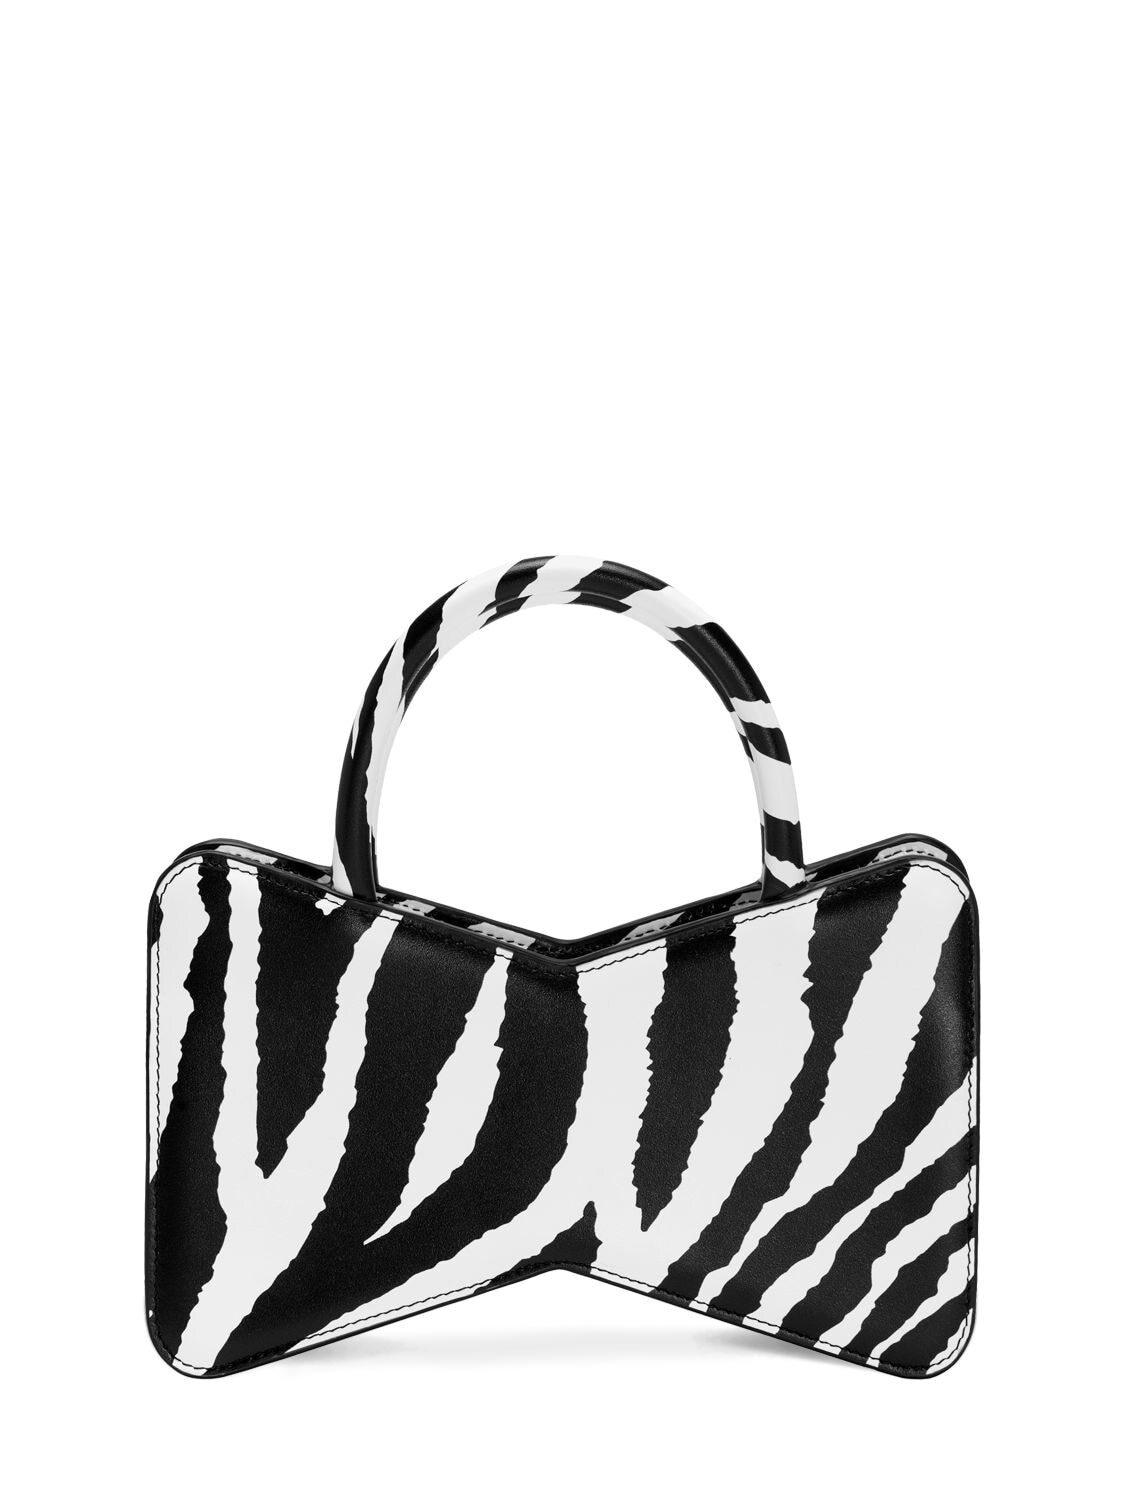 MACH & MACH Medium Bow Zebra Print Leather Bag in black / white